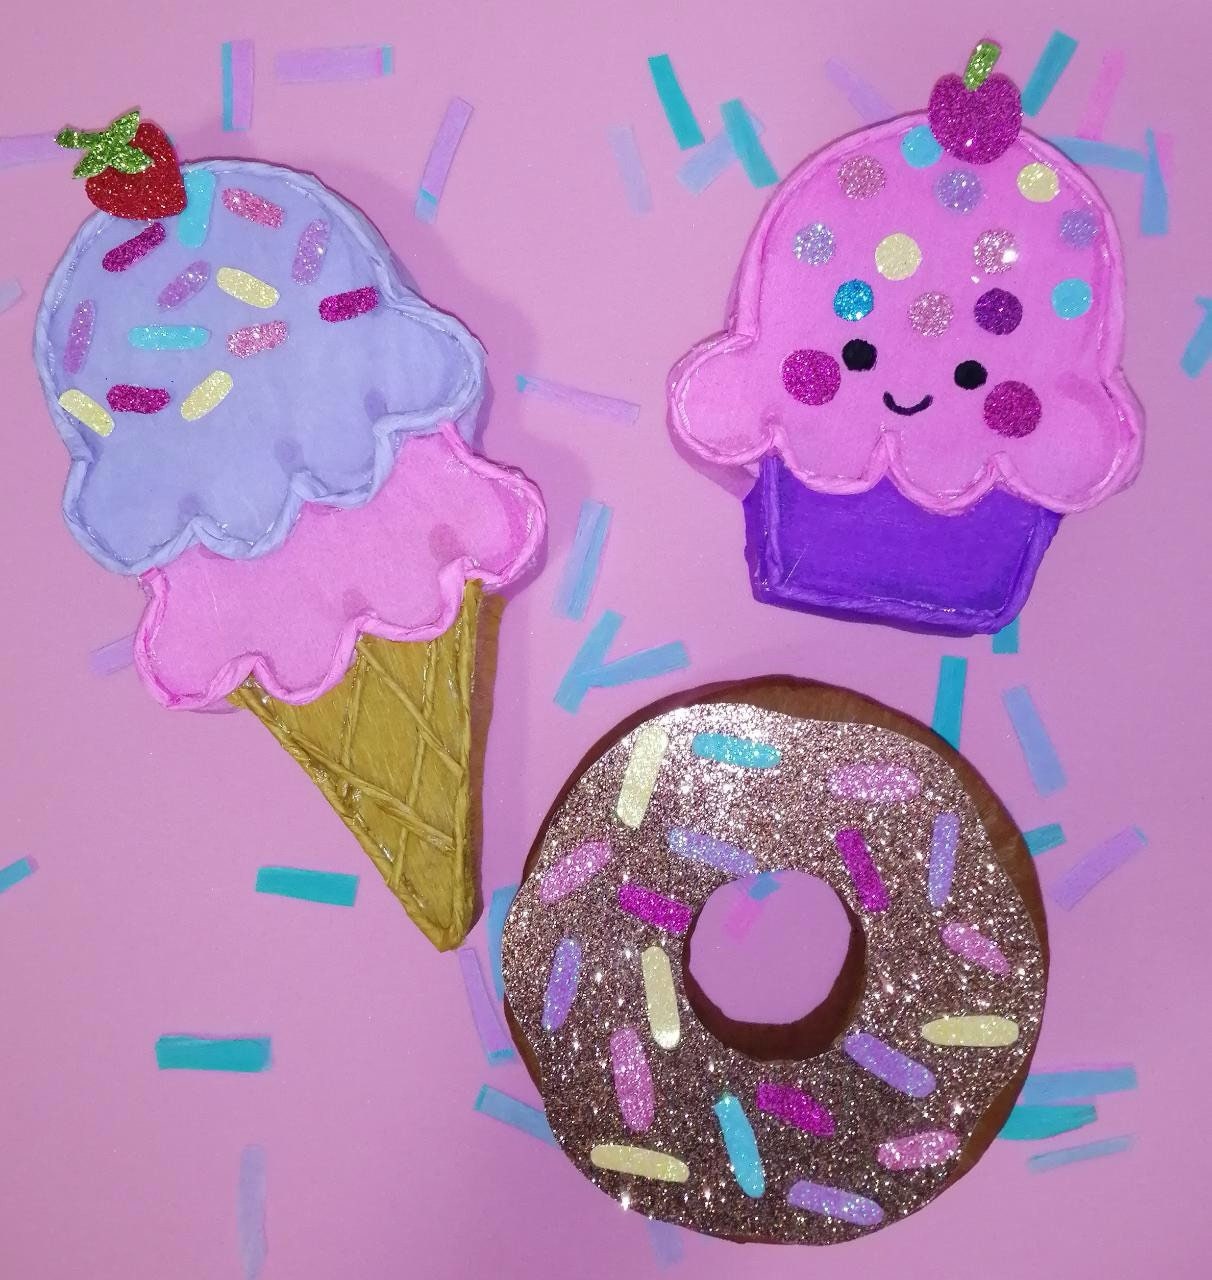 Iscream Donuts Mini Kids Stationery Set